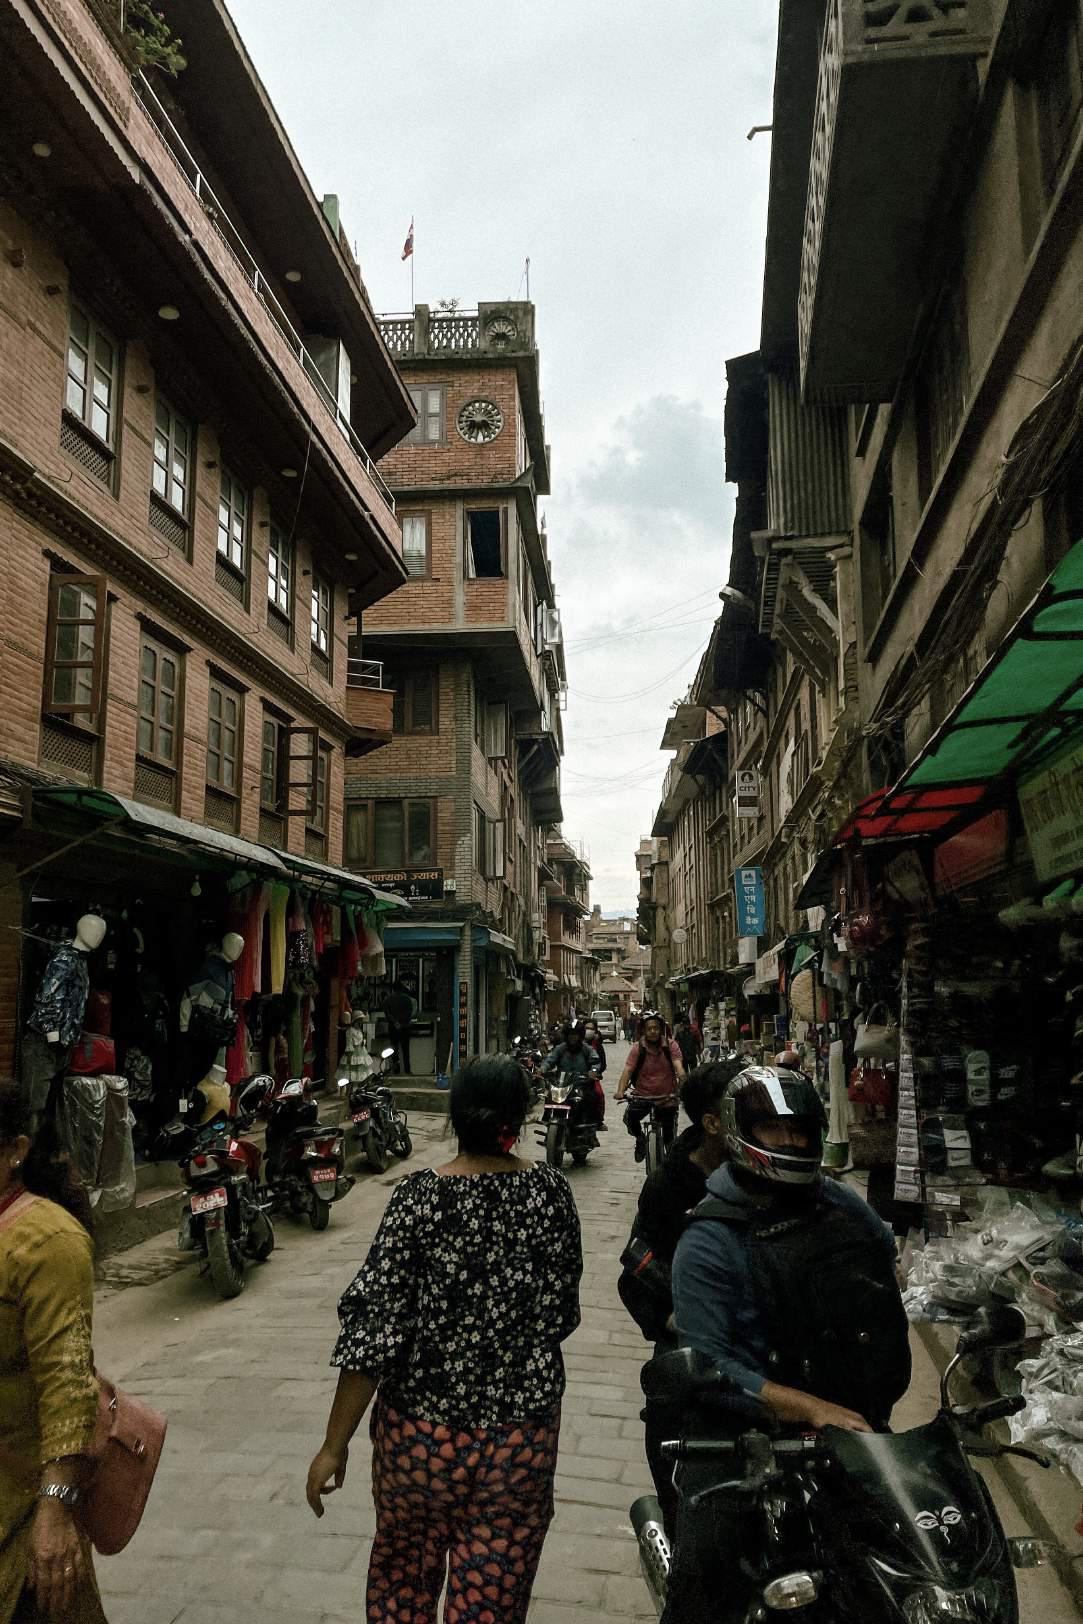 a street scene in kathmandu nepal where locals are walking and motorbiking on the cobblestone pathway